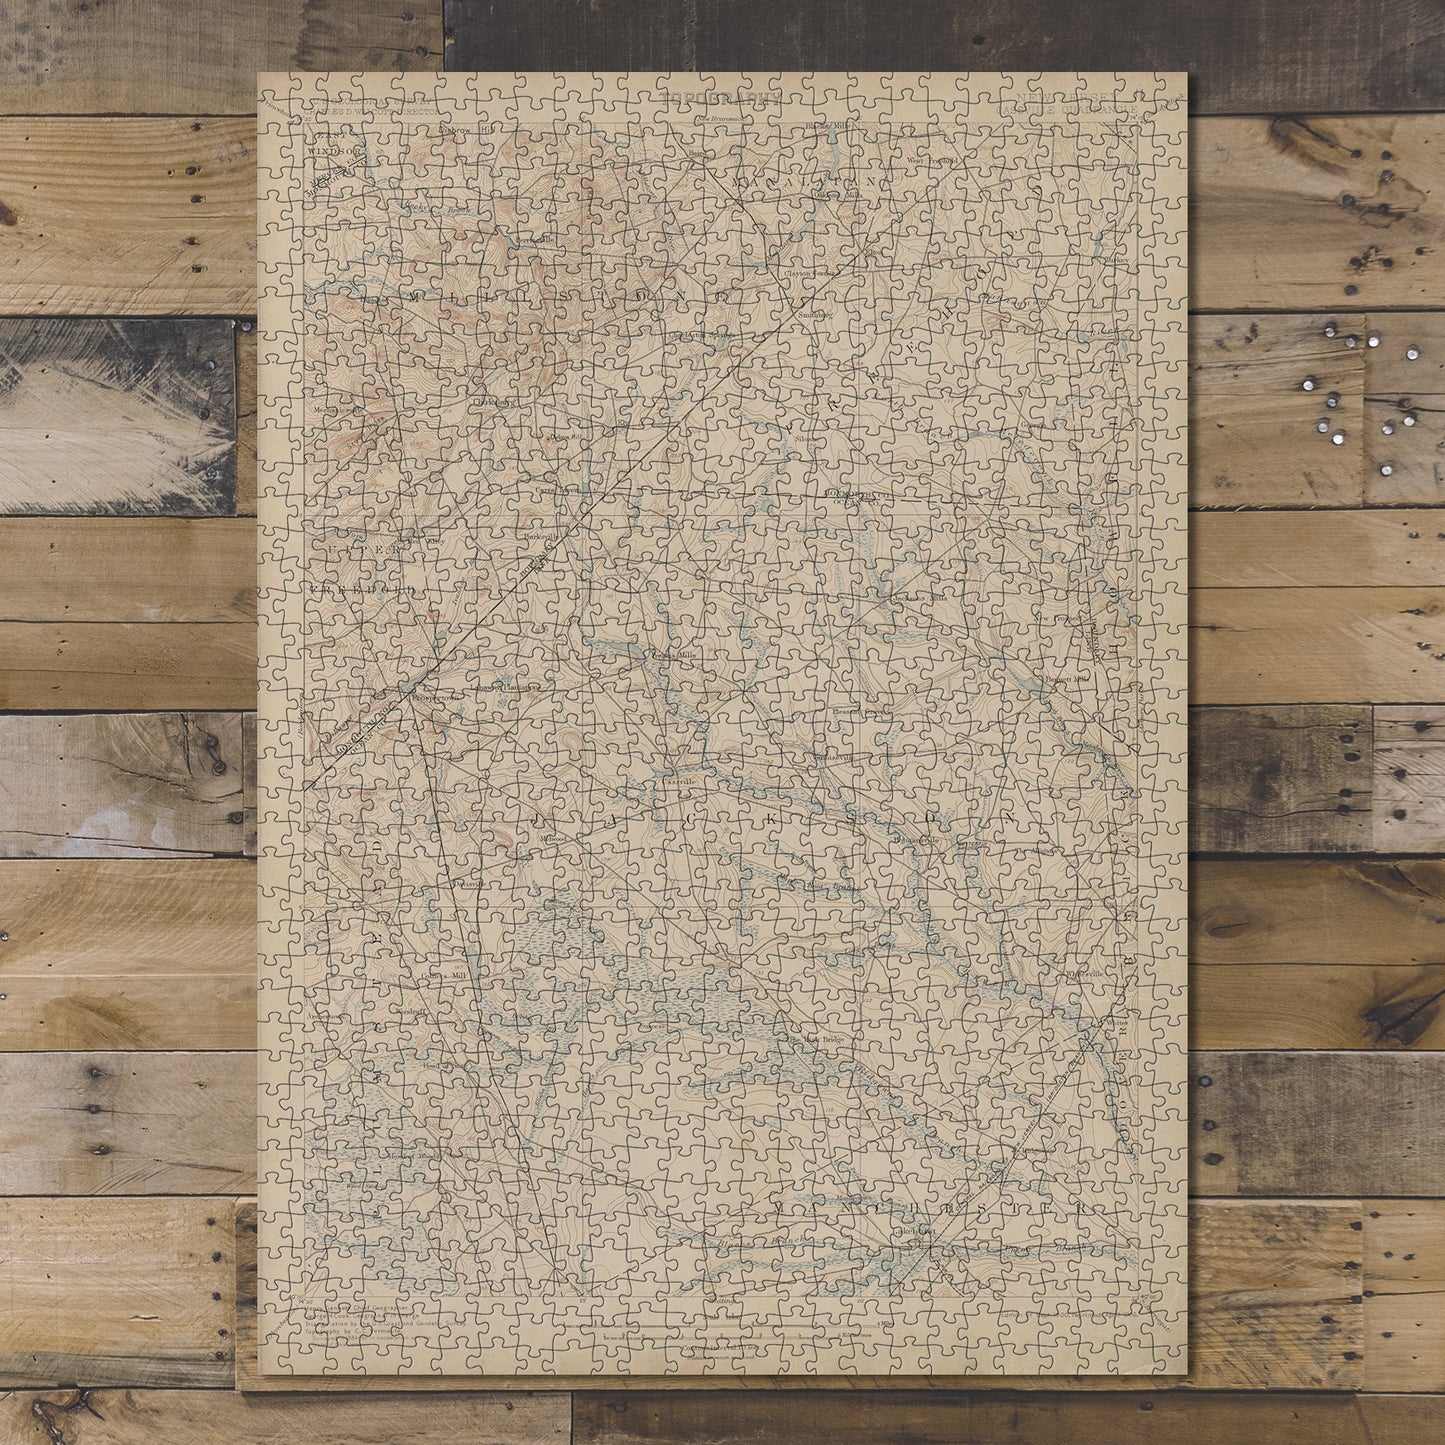 1000 Piece Jigsaw Puzzle Map of Washington Cassvilie, survey of 1884-85, ed. of 1900